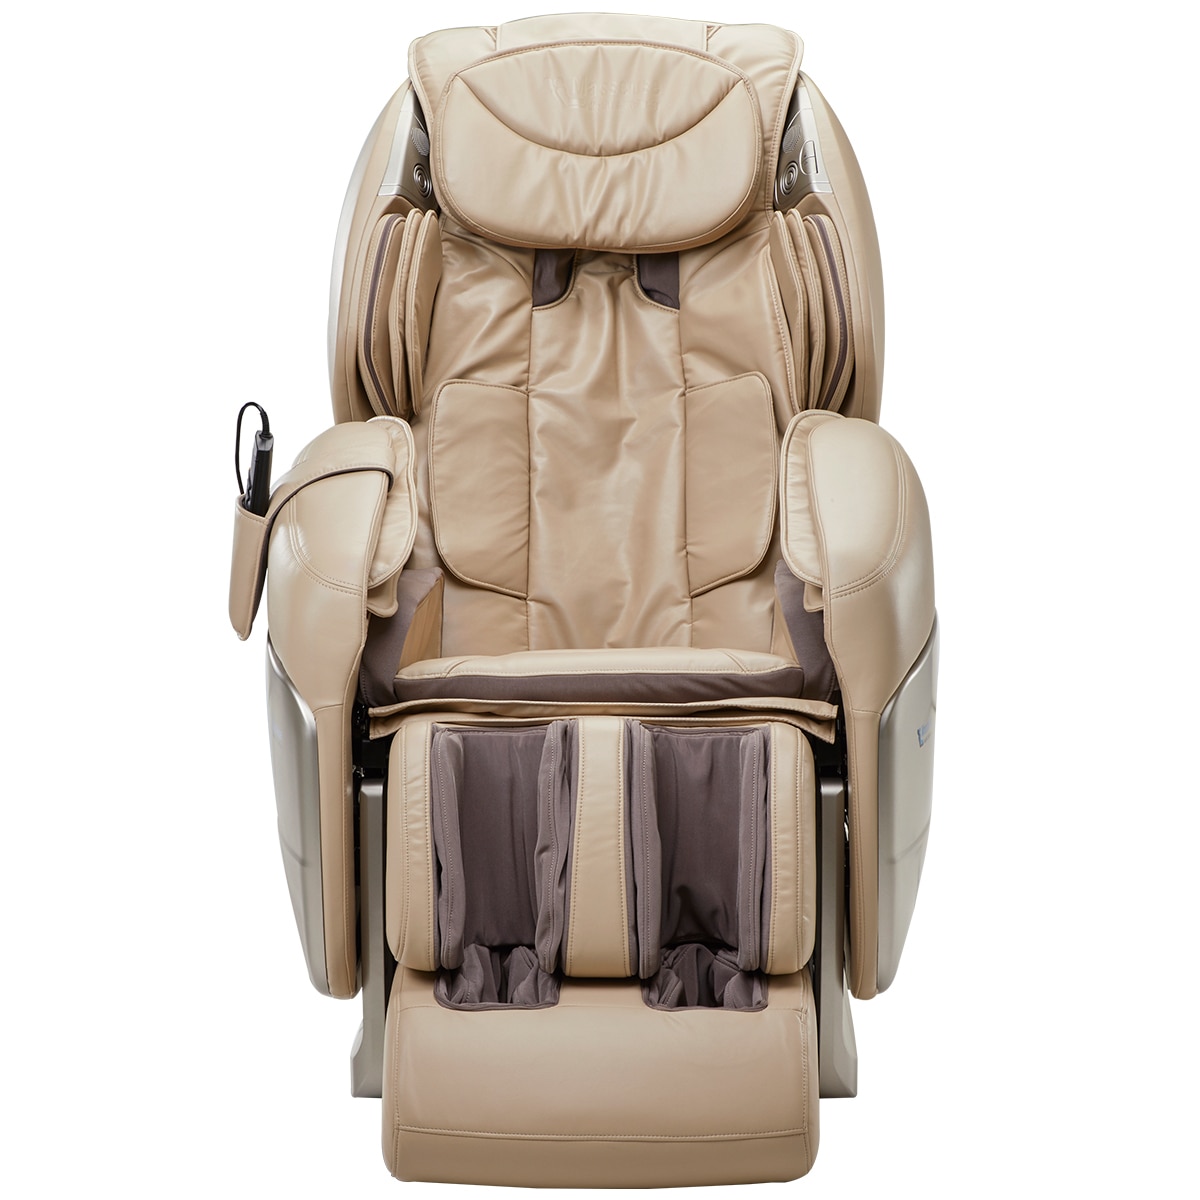 Masseuse Massage Chairs Platinum + Massage Chairs - Cream